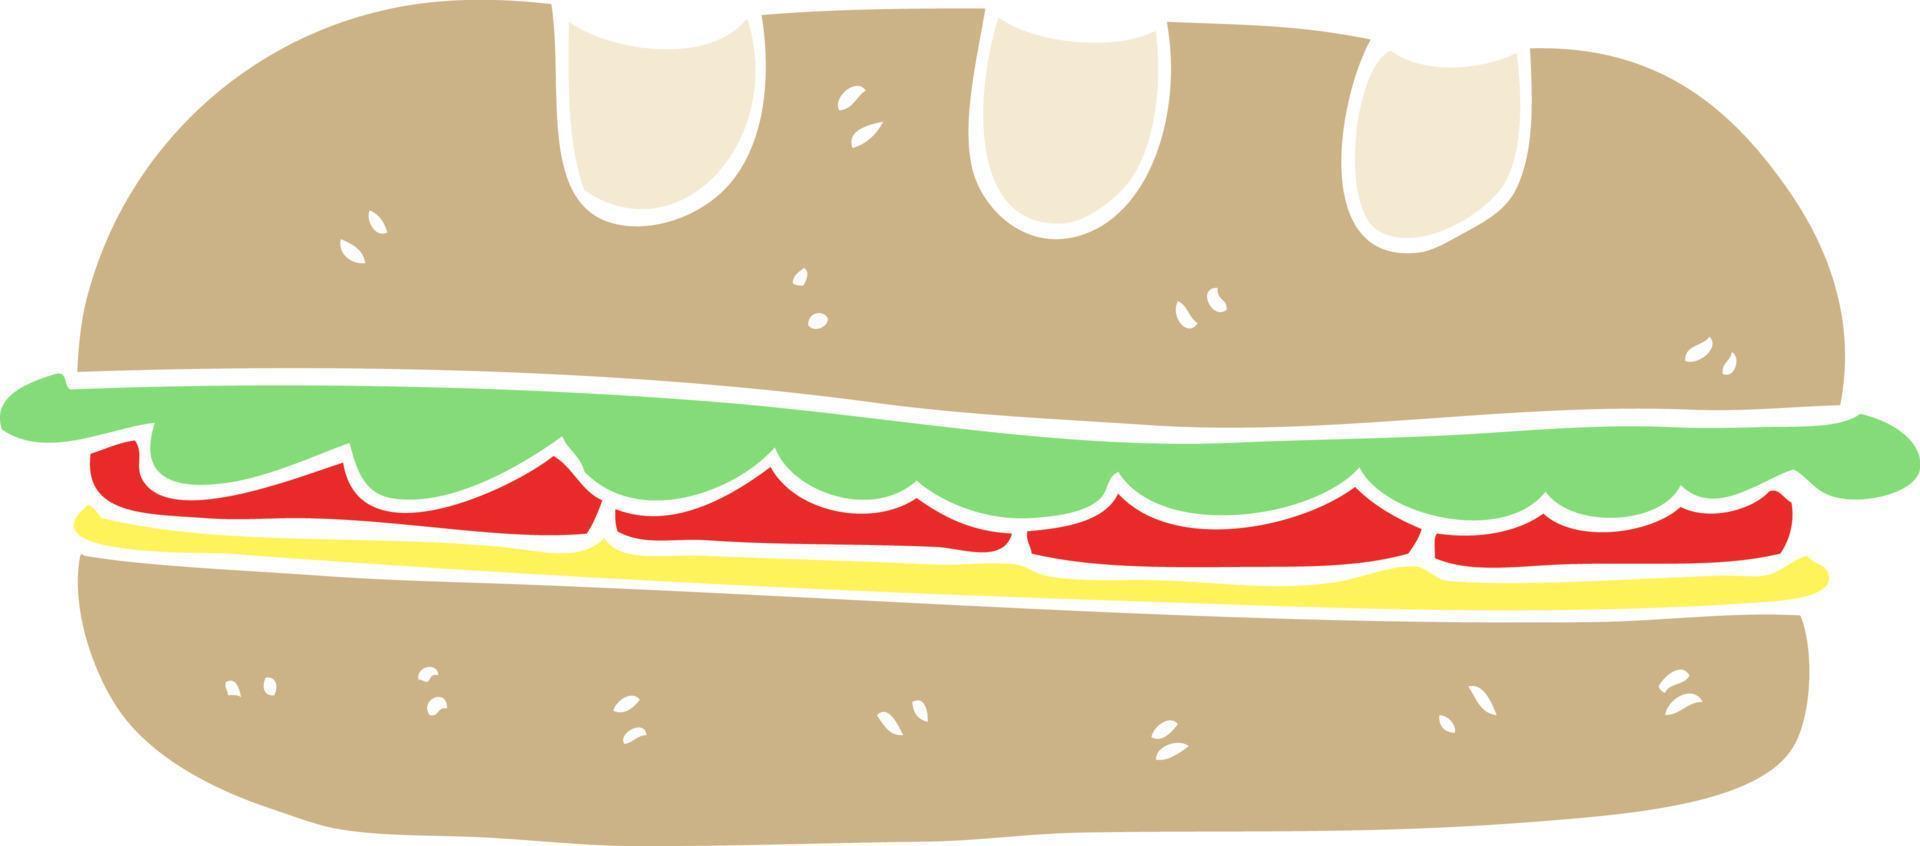 flat color illustration of a cartoon huge sandwich vector